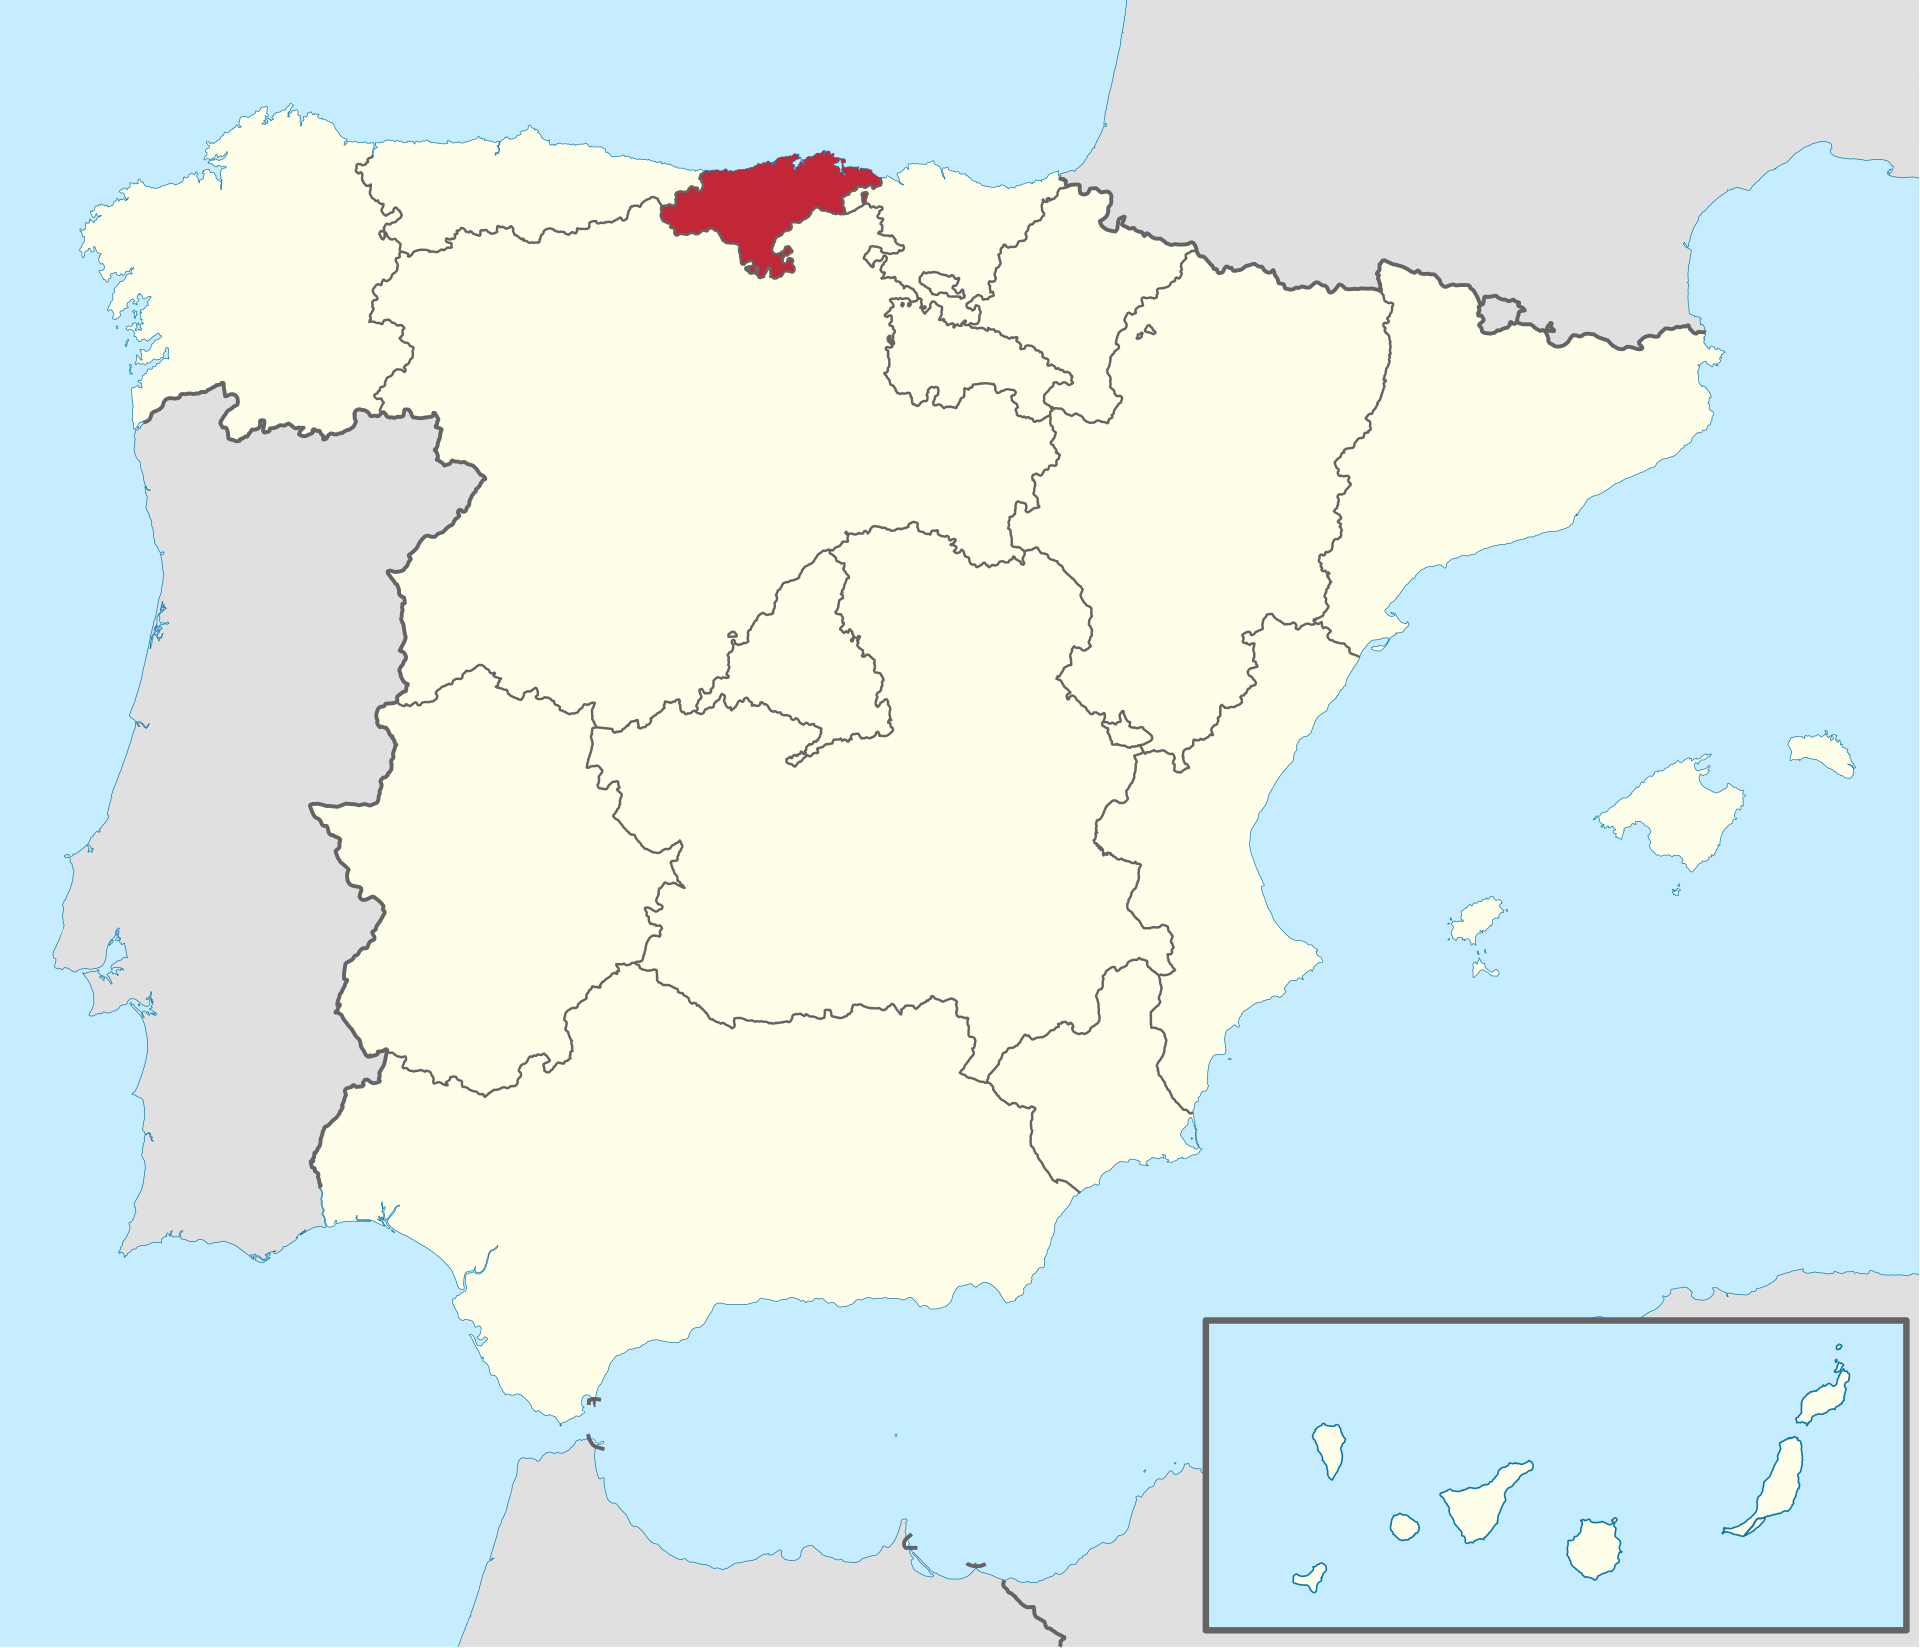 House Liana Urbex location or around the region Cantabria, Spain